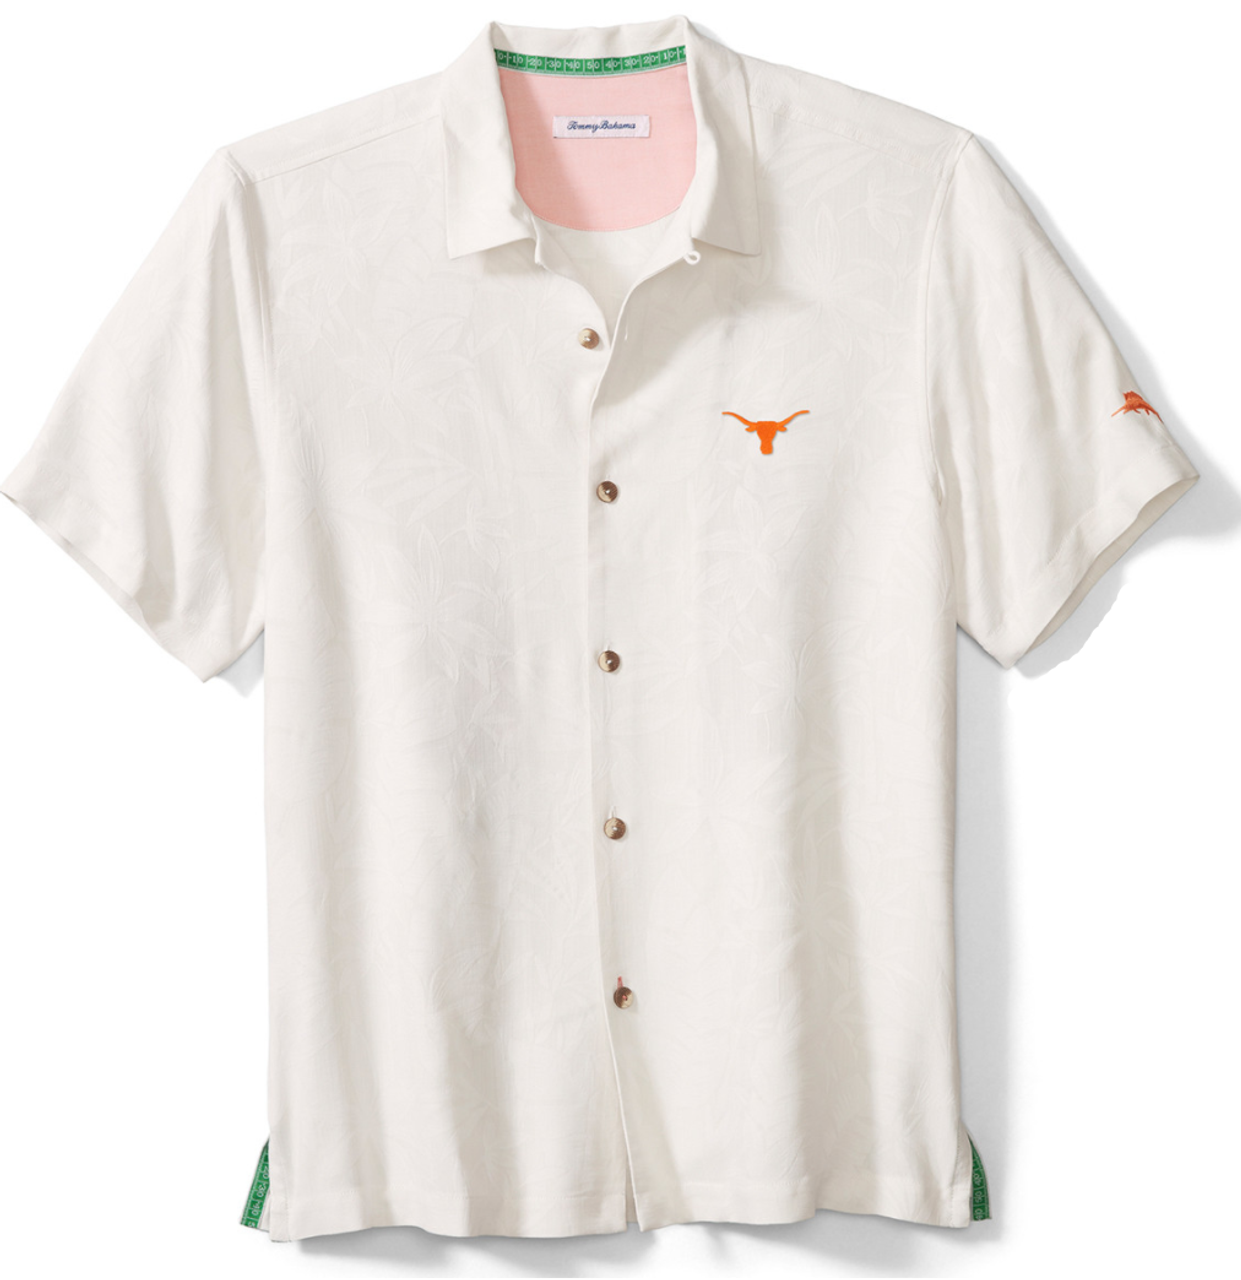 Lids Texas Rangers Tommy Bahama Baseball Bay Button-Up Shirt - Navy